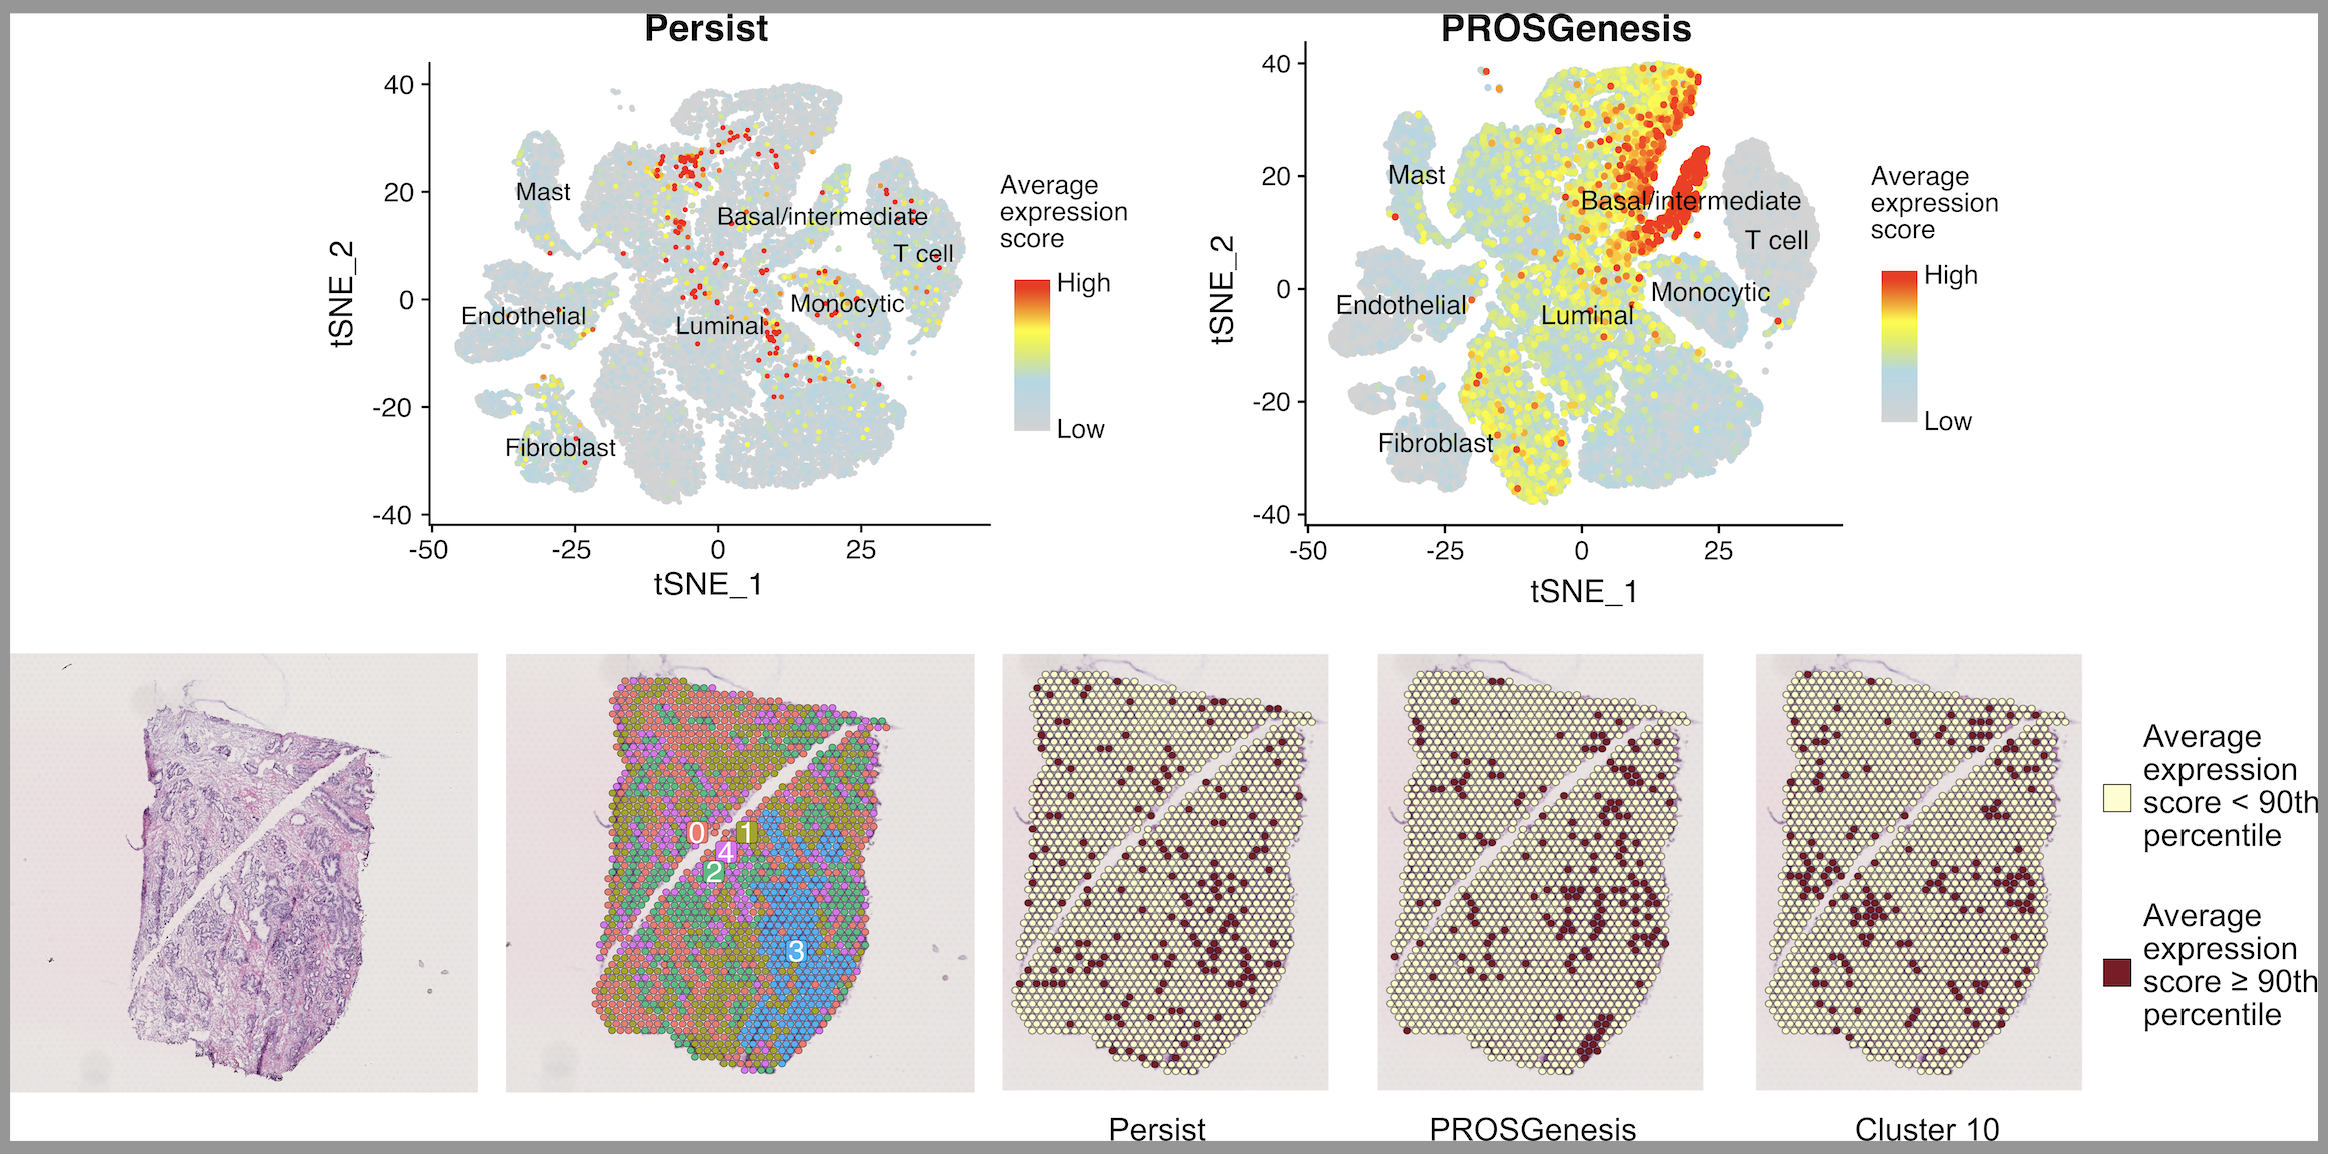 Single-cell level regenerative (PROSGenesis) and stem-like (Persist) gene patterns identified in prostate specimens